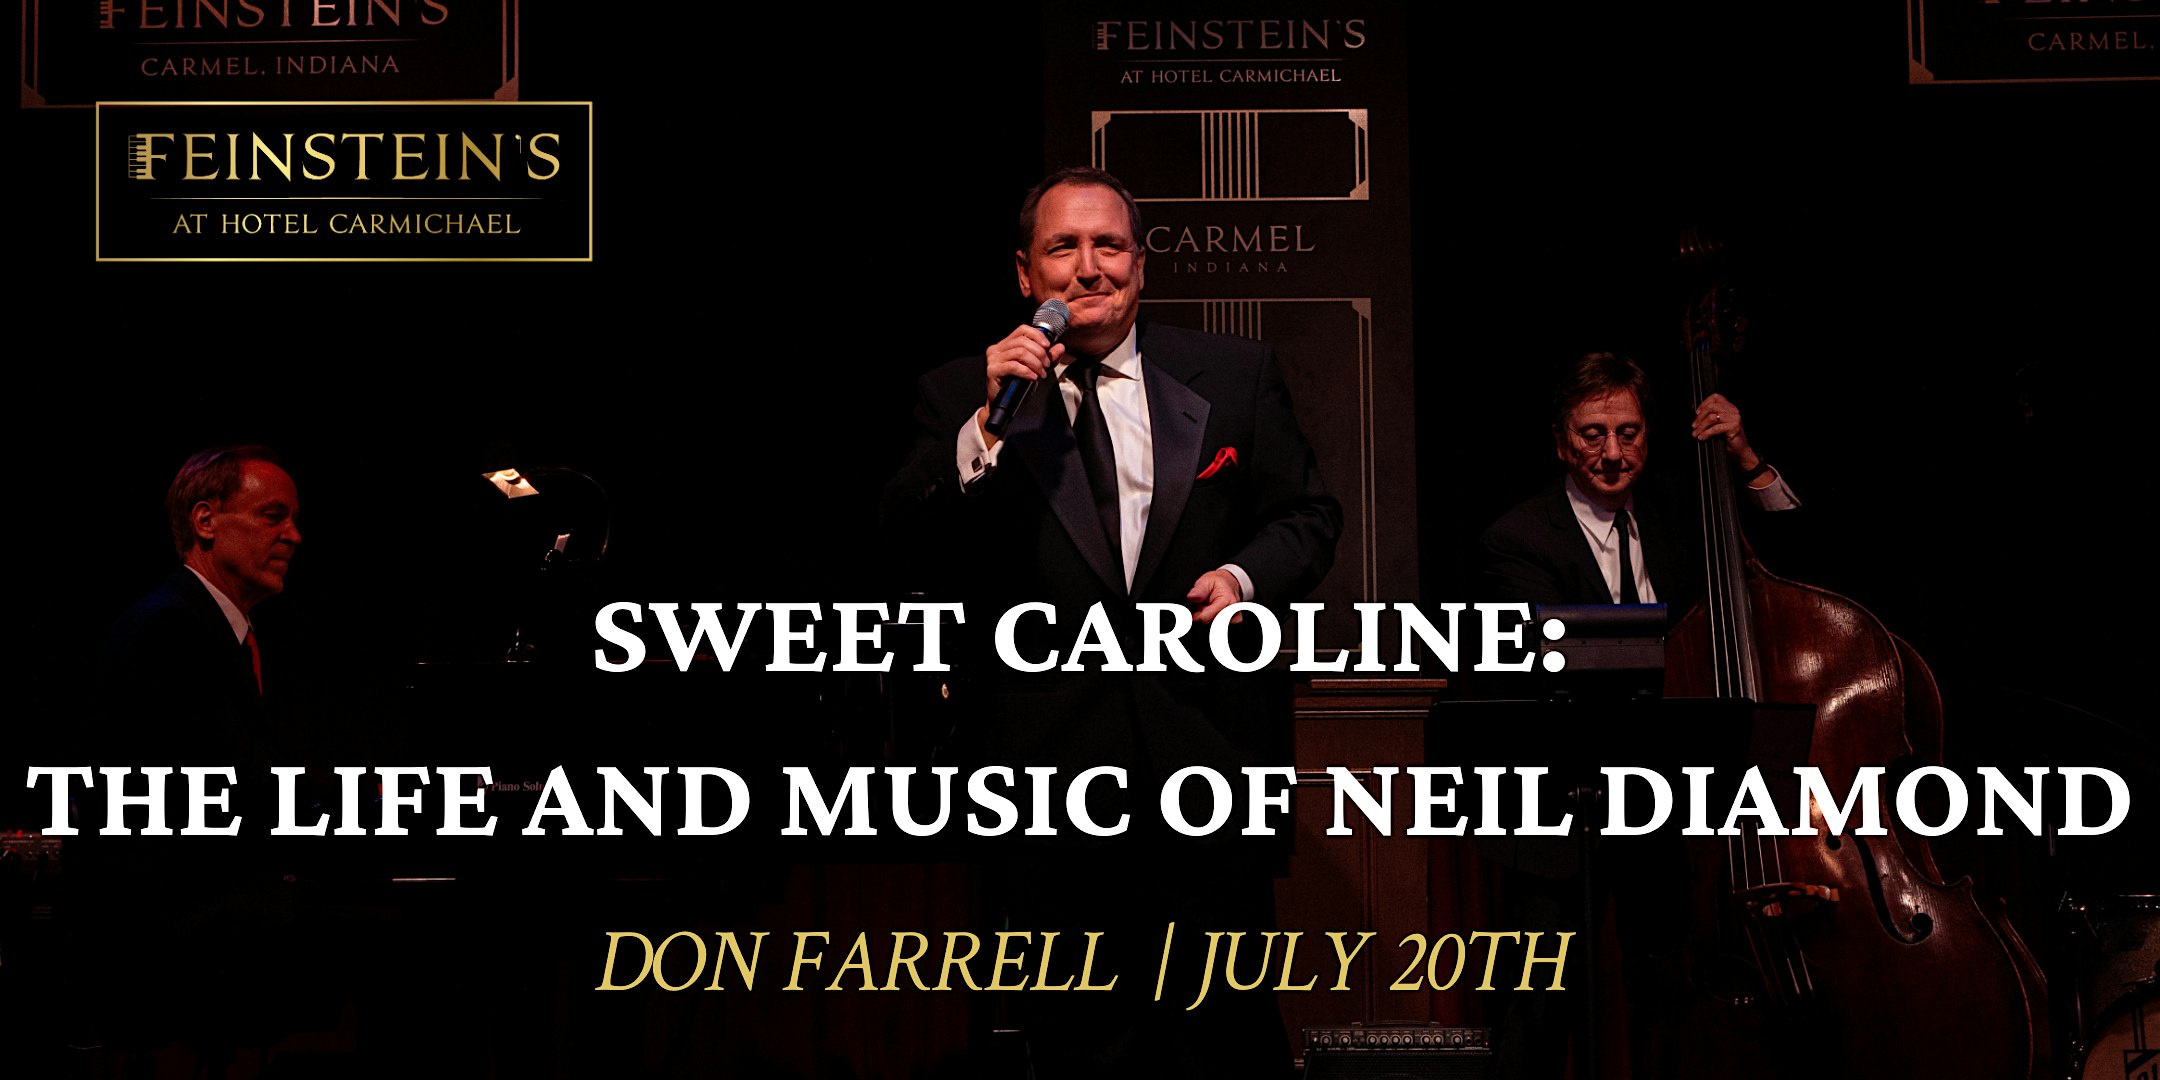 SWEET CAROLINE - The Life and Music of Neil Diamond